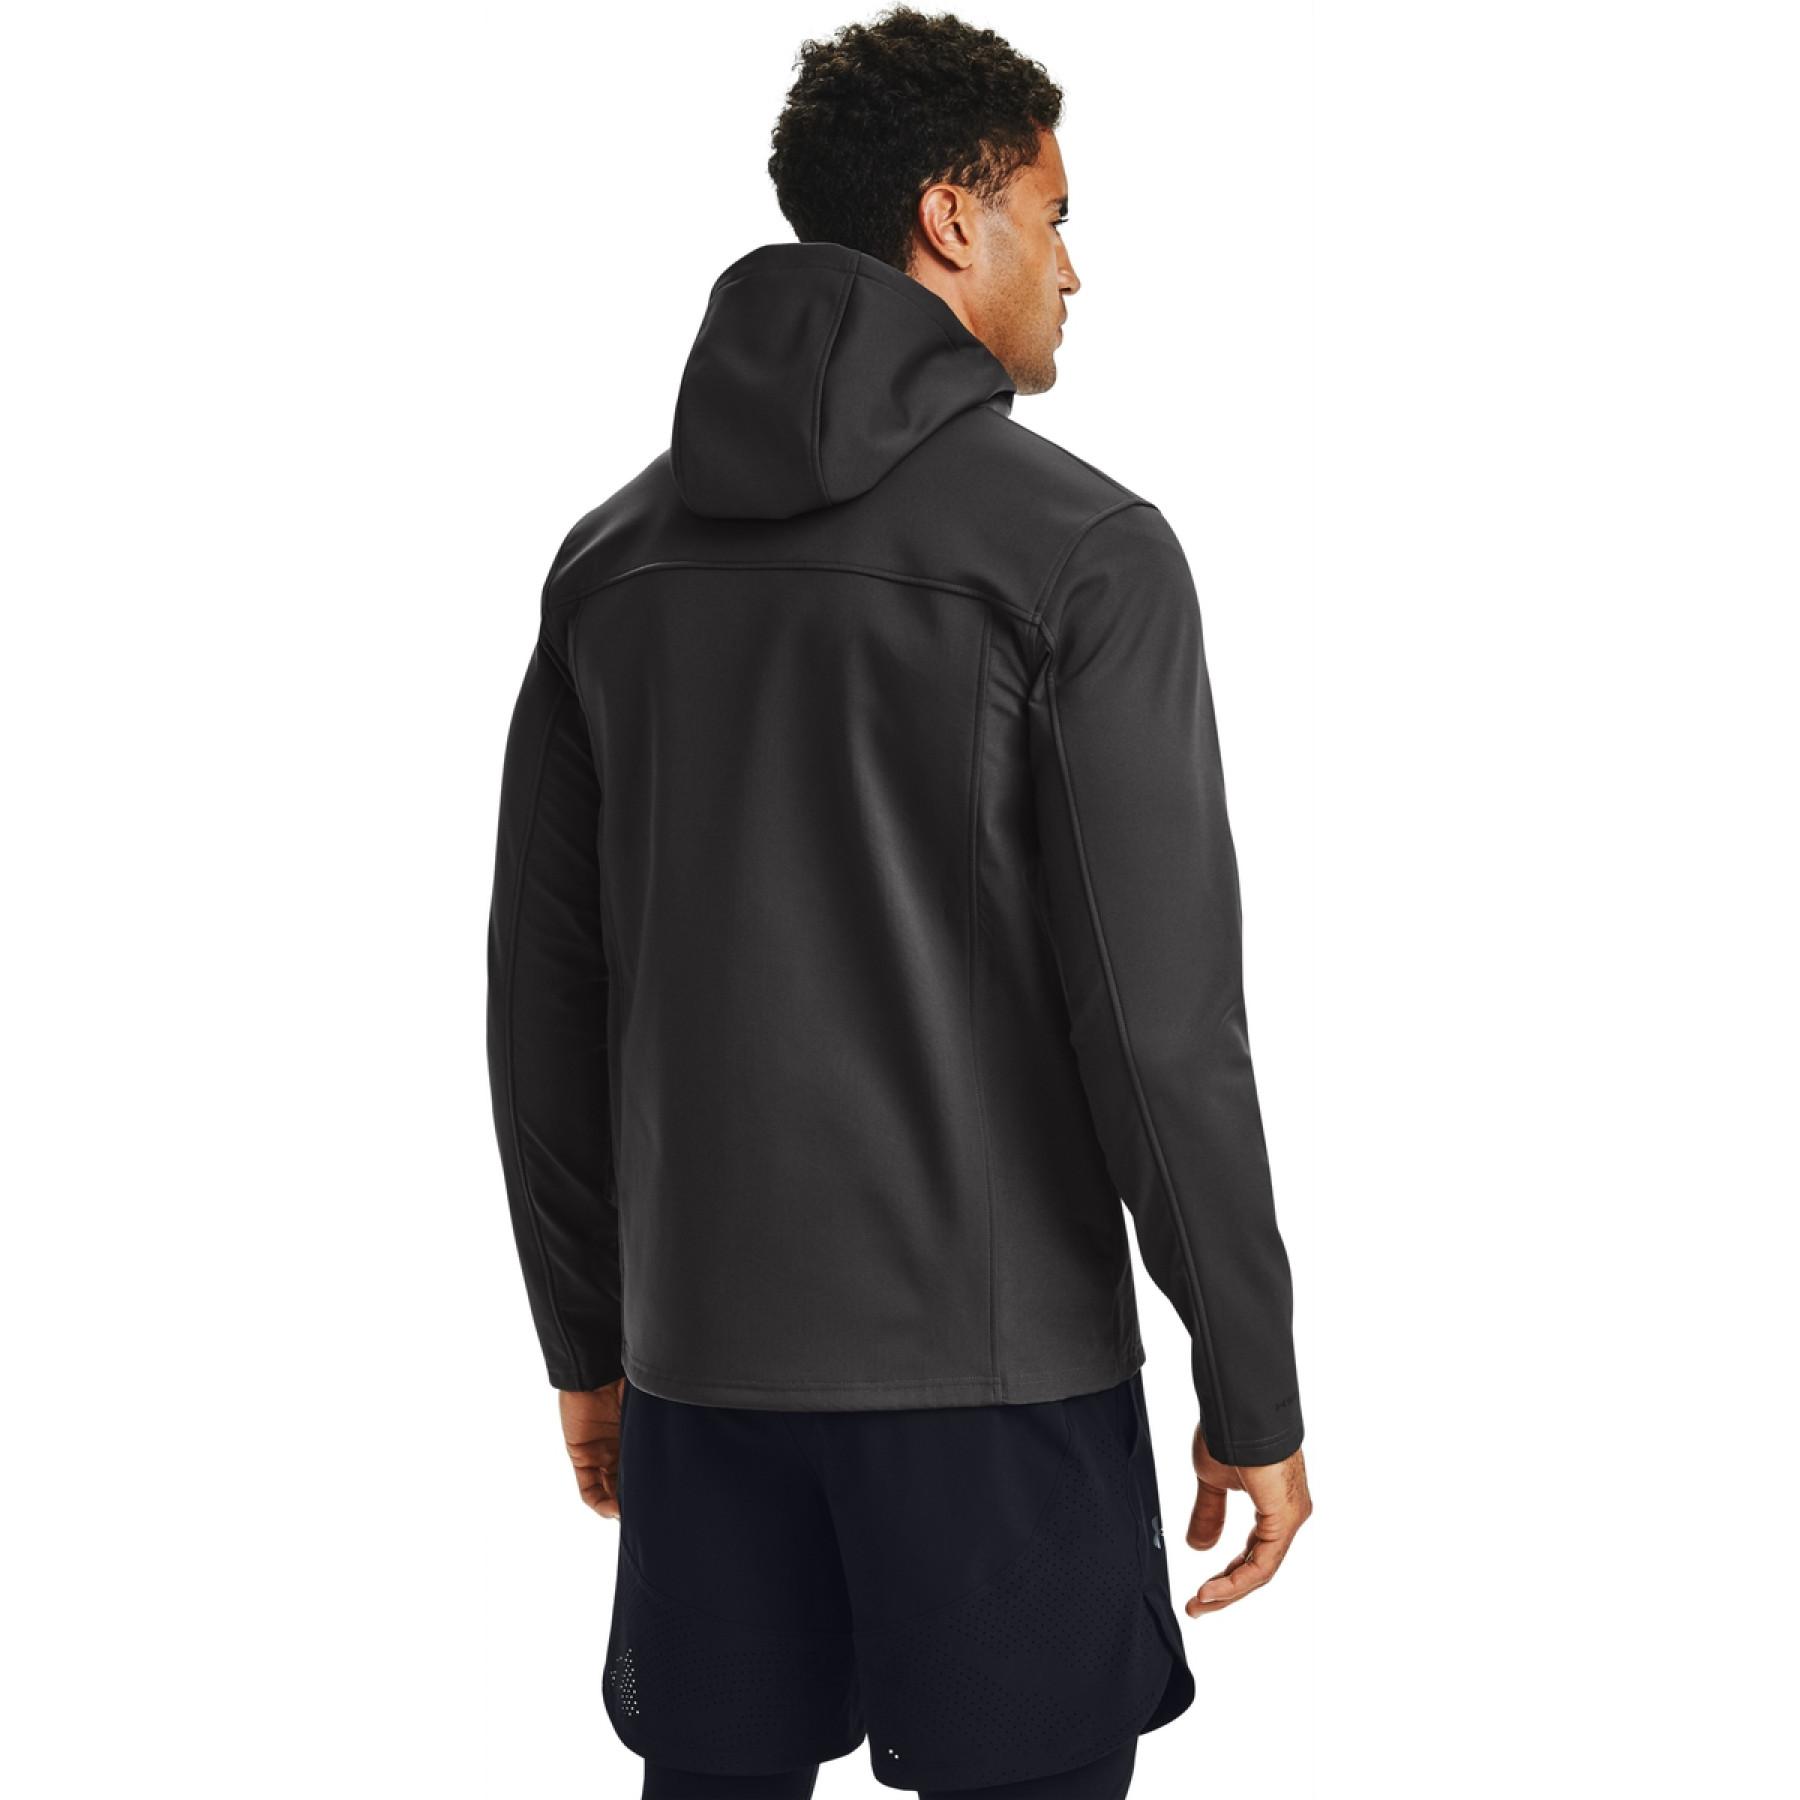 ColdGear Infrared Shield Hooded Jacket